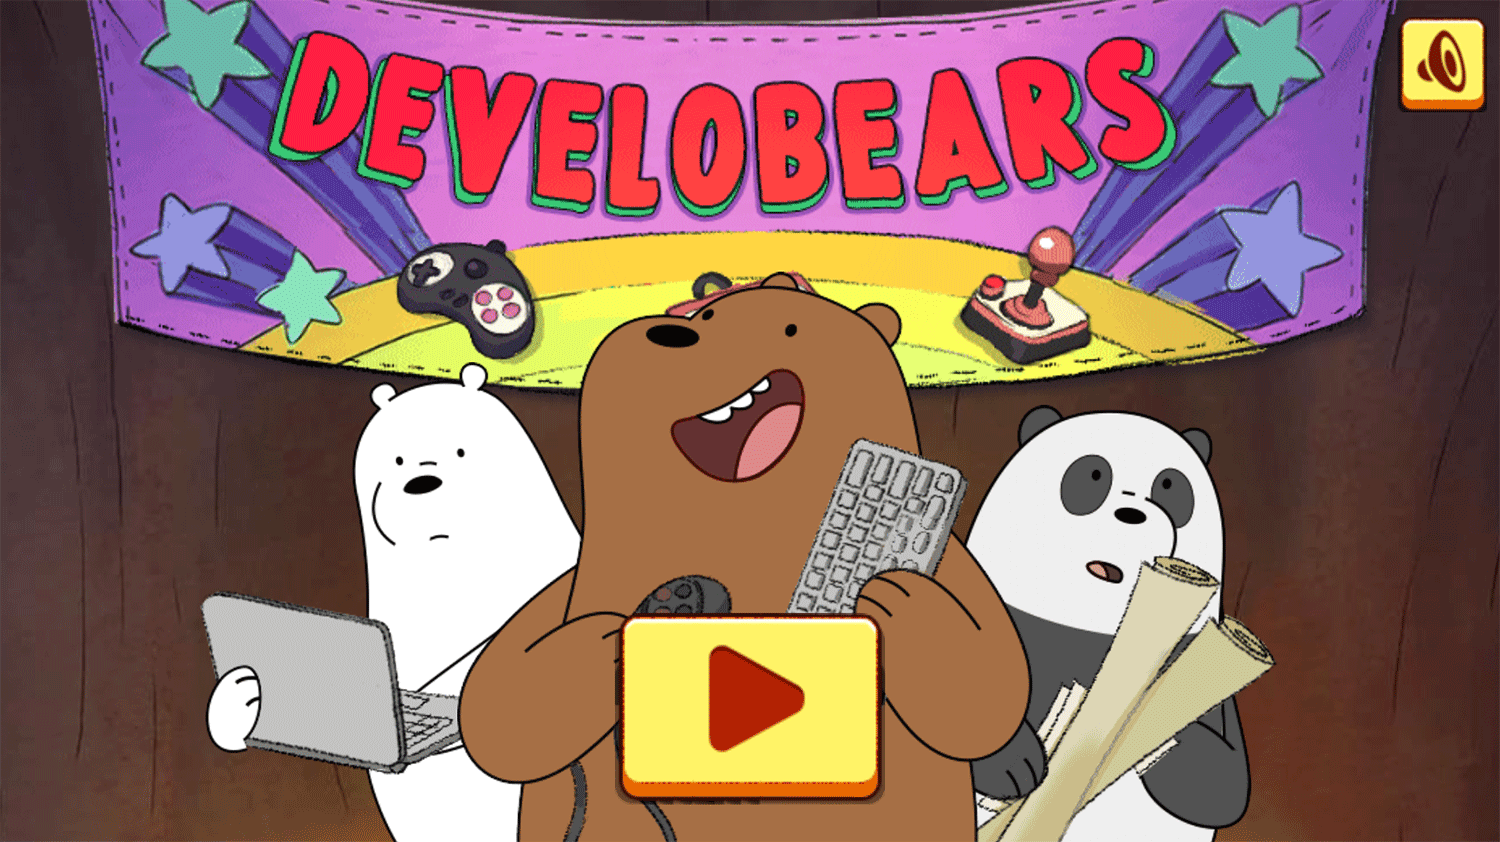 We Bare Bears Develobears Welcome Screen Screenshot.